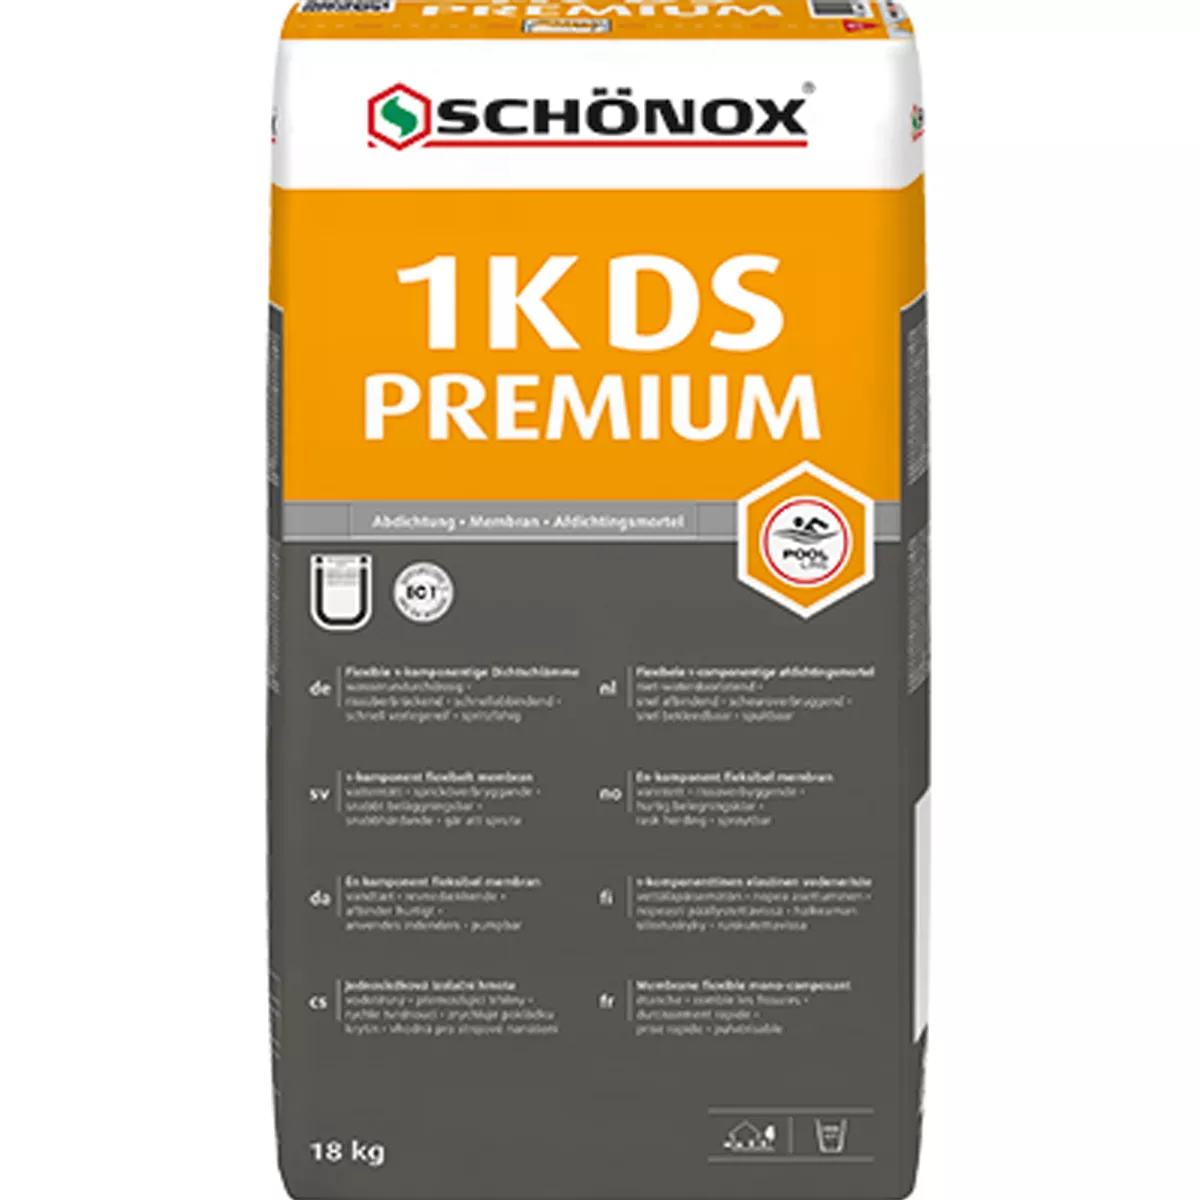 Schönox 1K-DS PREMIUM - Tätningsgödning / Tätning (18 Kg)